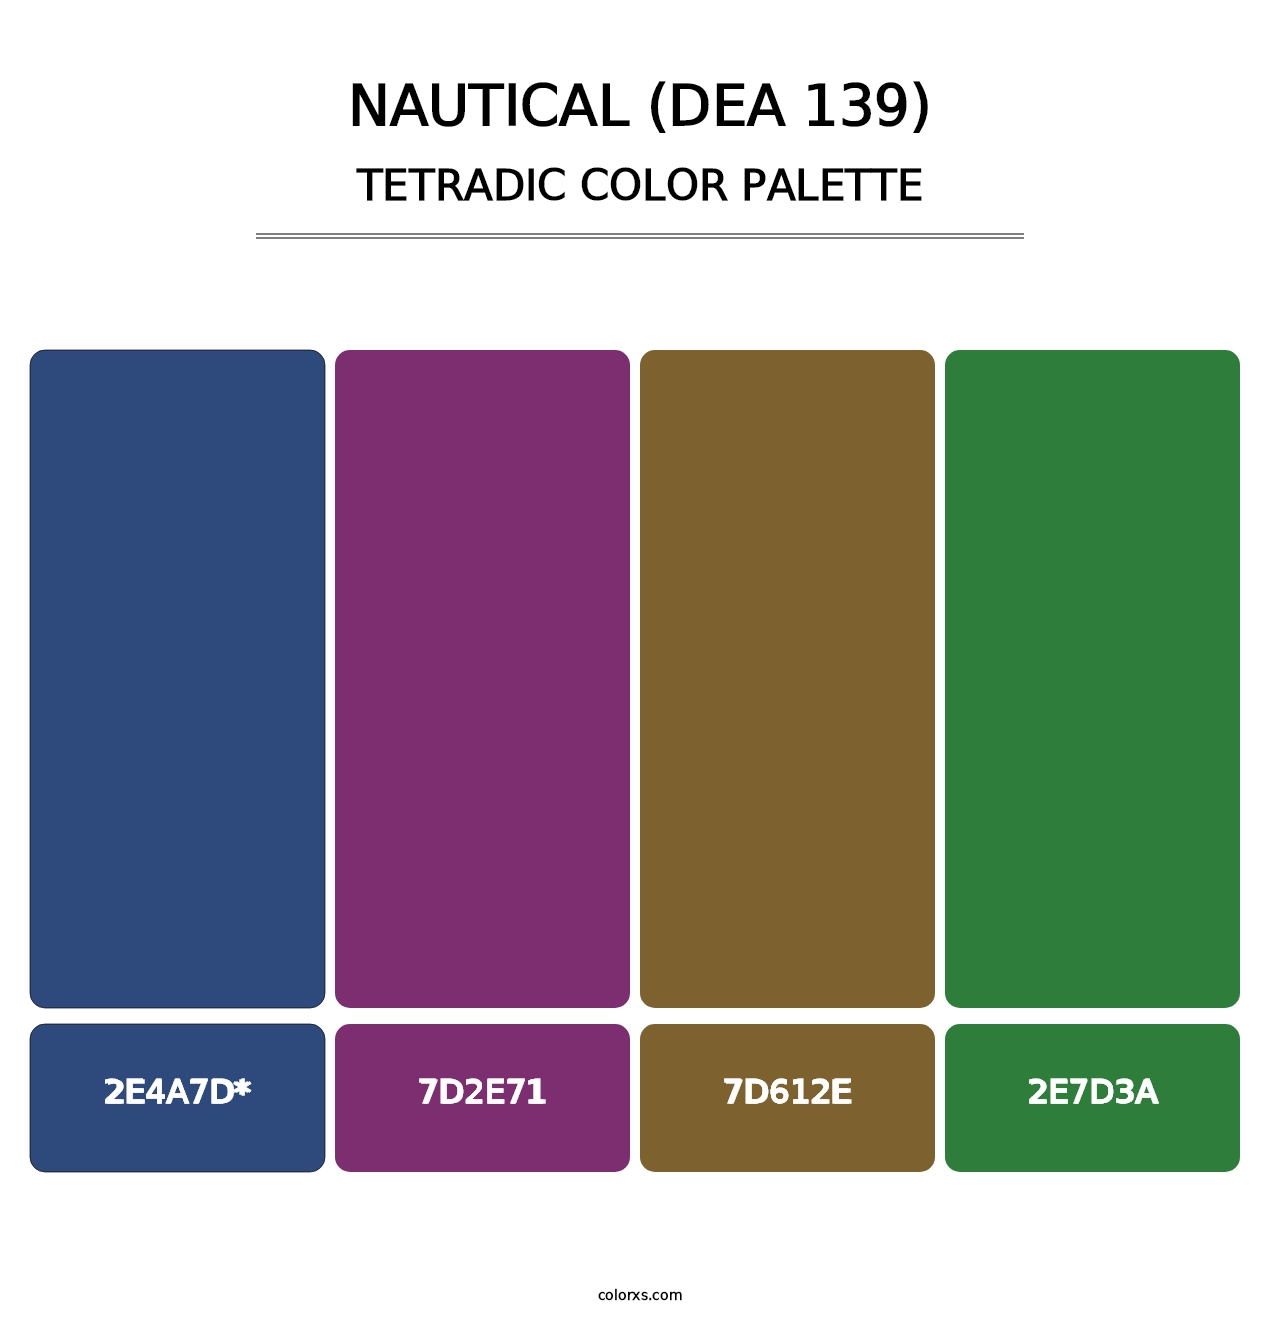 Nautical (DEA 139) - Tetradic Color Palette